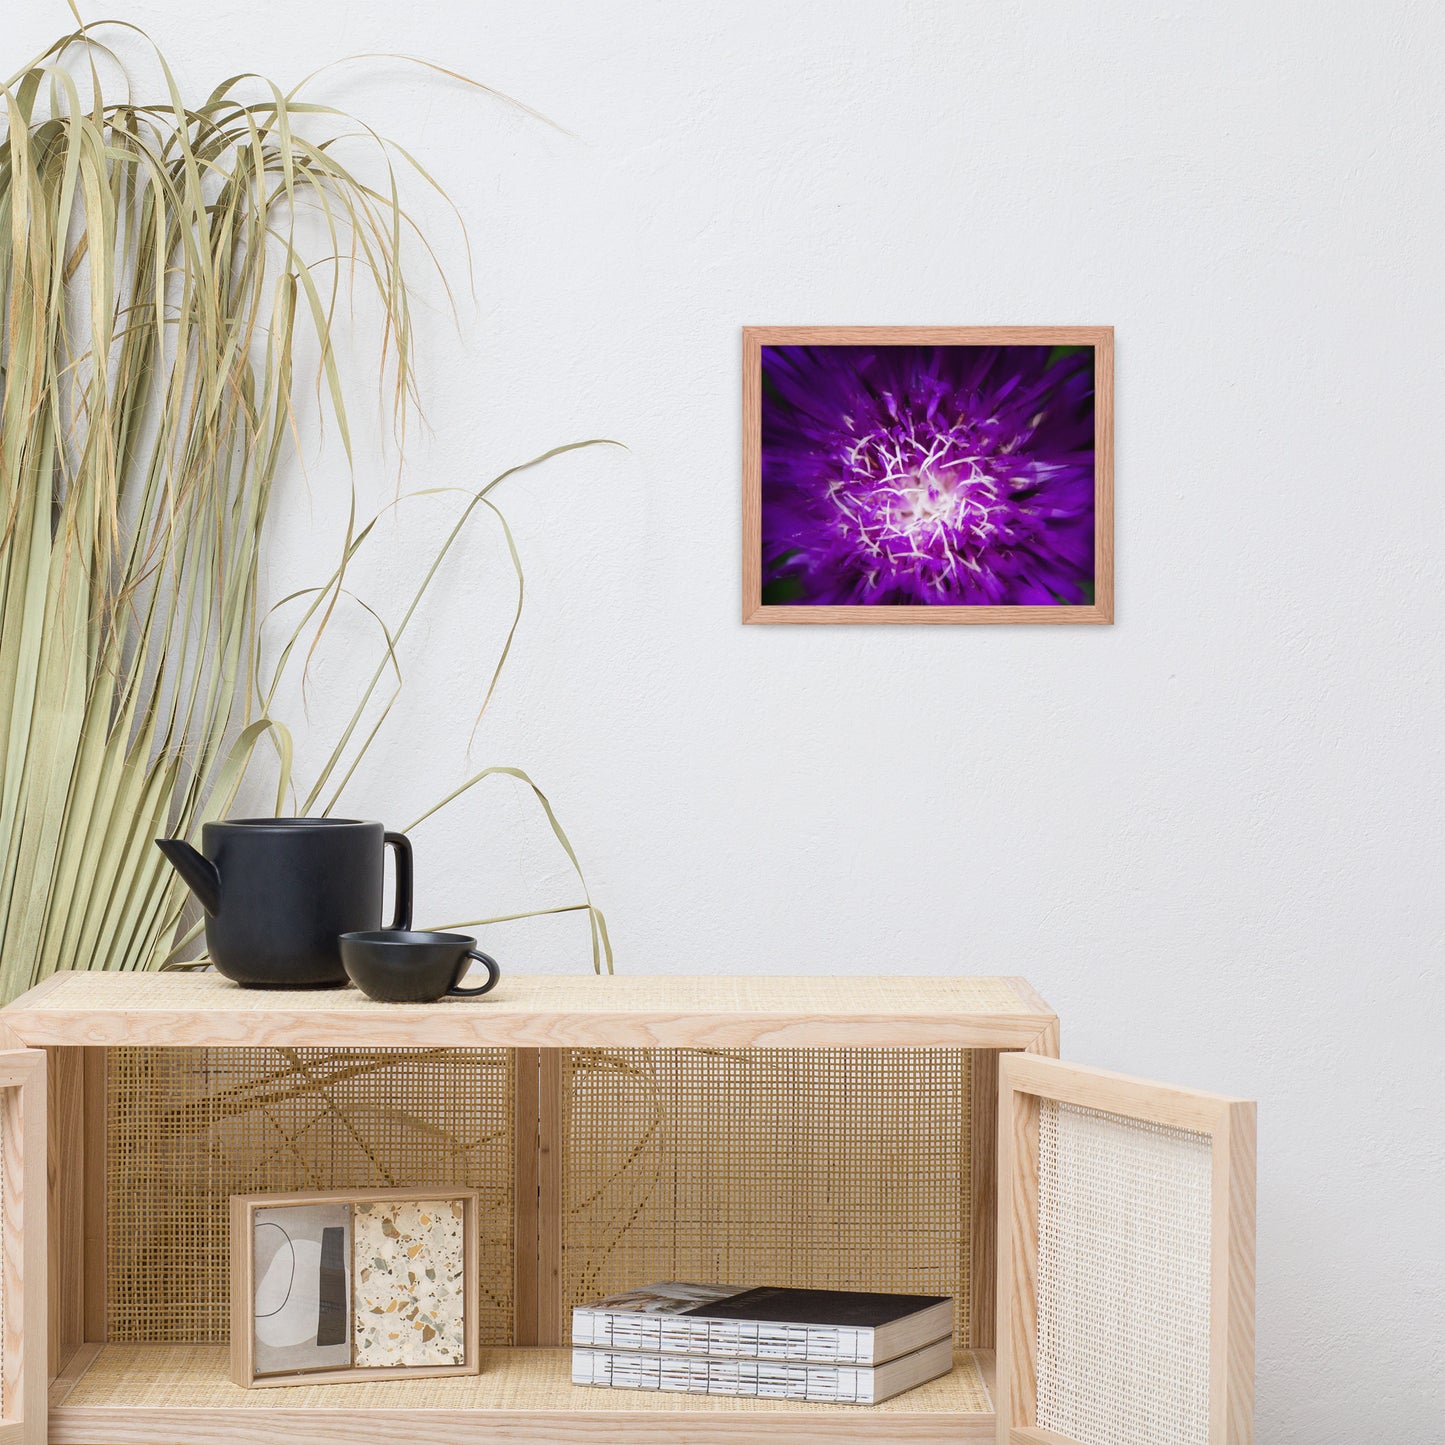 Living Room Flower Wall: Purple Abstract Flower - Botanical / Floral / Flora / Flowers / Nature Photograph Framed Wall Art Print - Artwork - Wall Decor